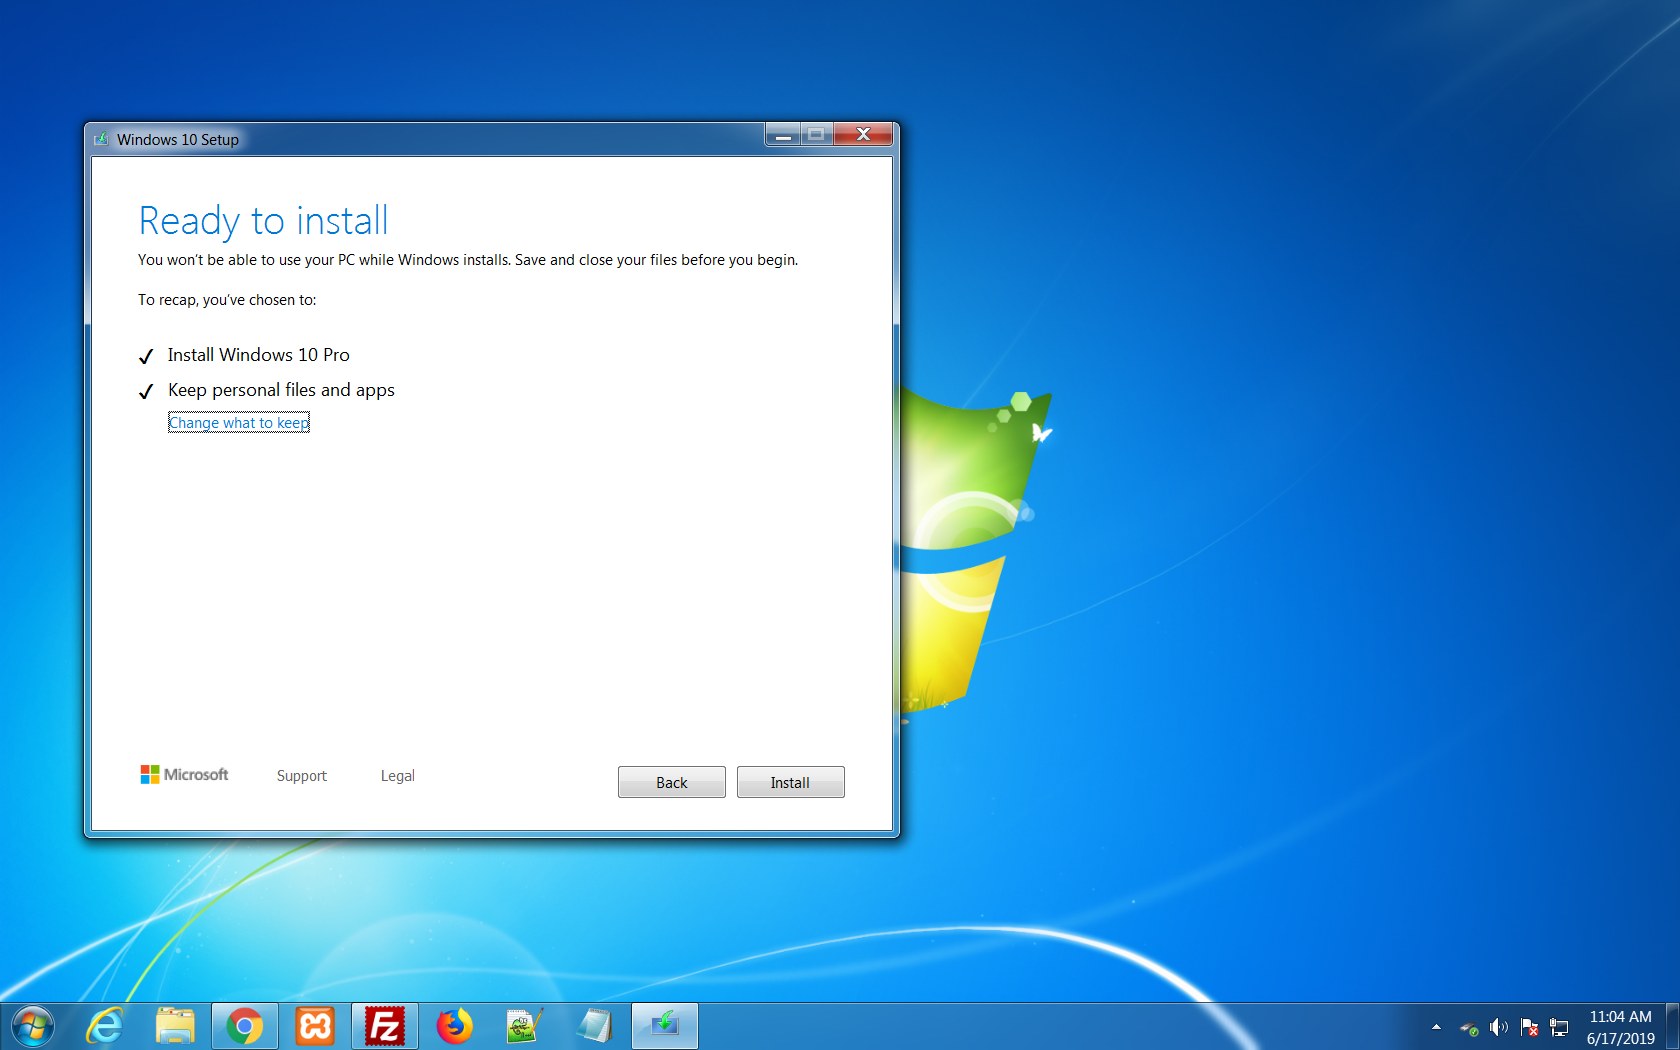 Installing Windows 10 Pro